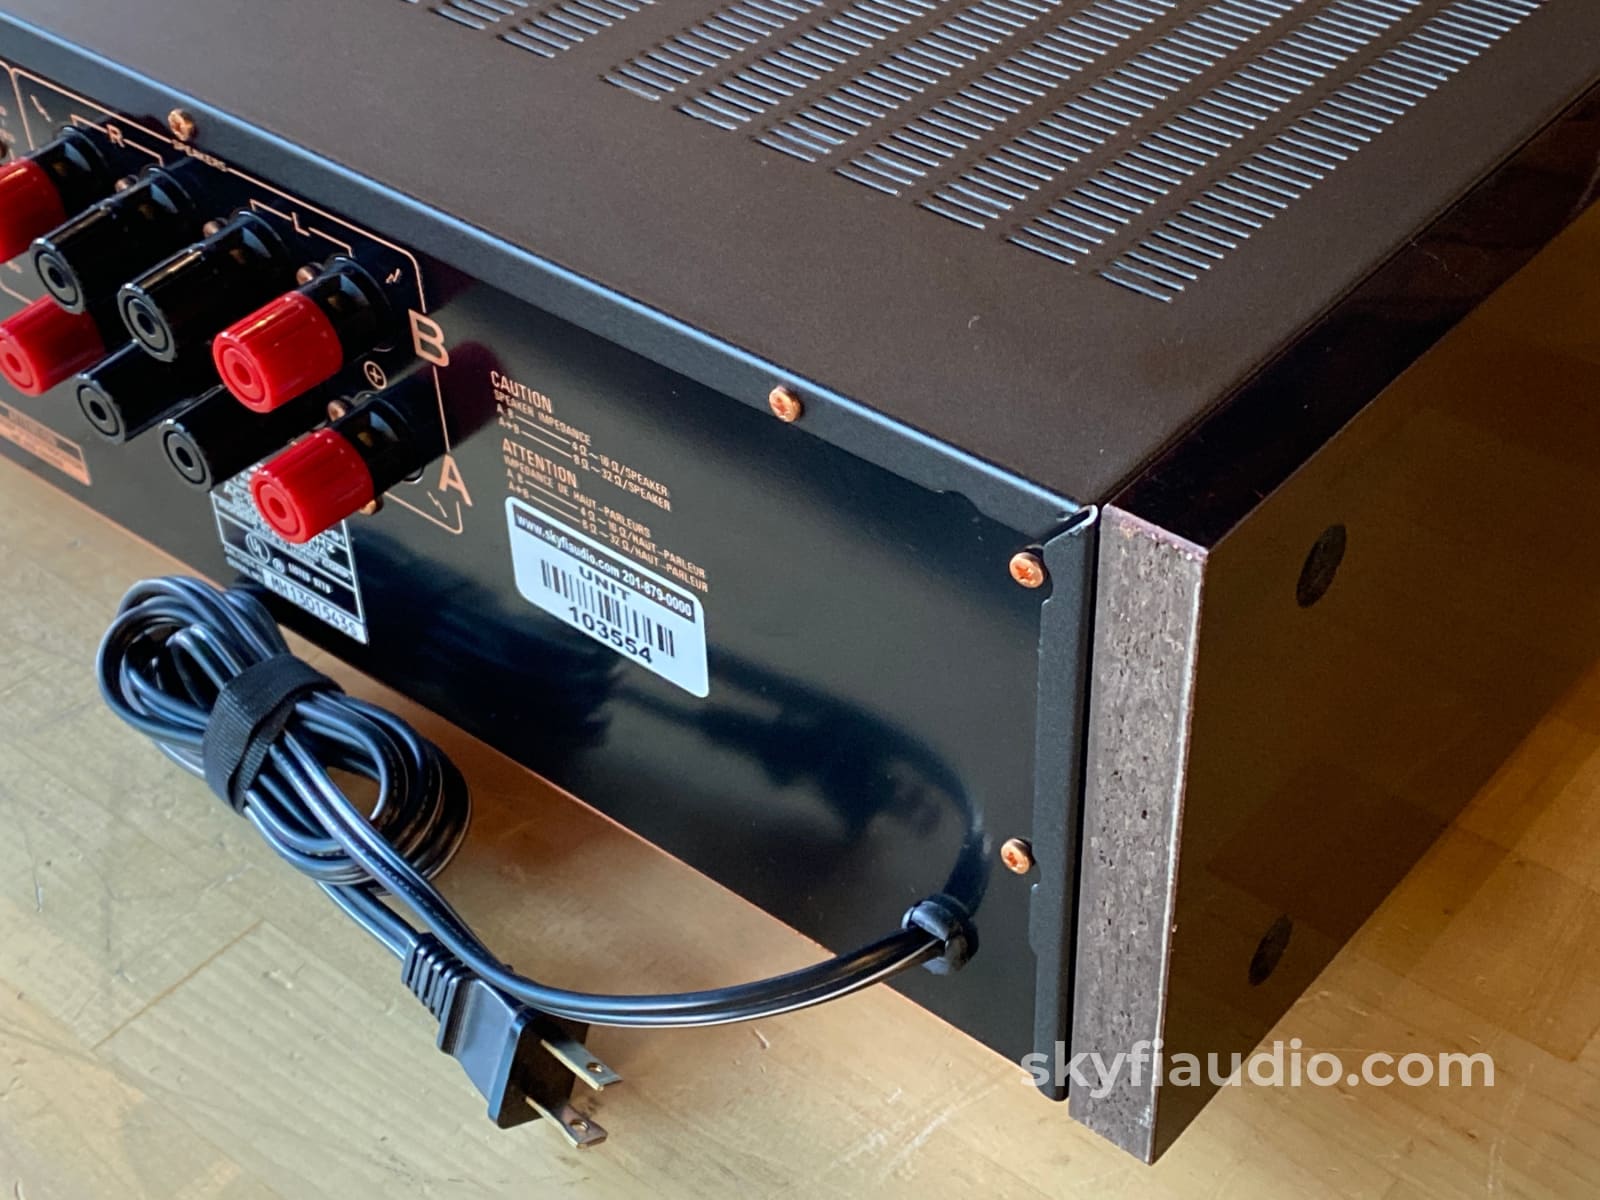 Pioneer Elite M-91 Vintage Solid State Amplifier - Gorgeous